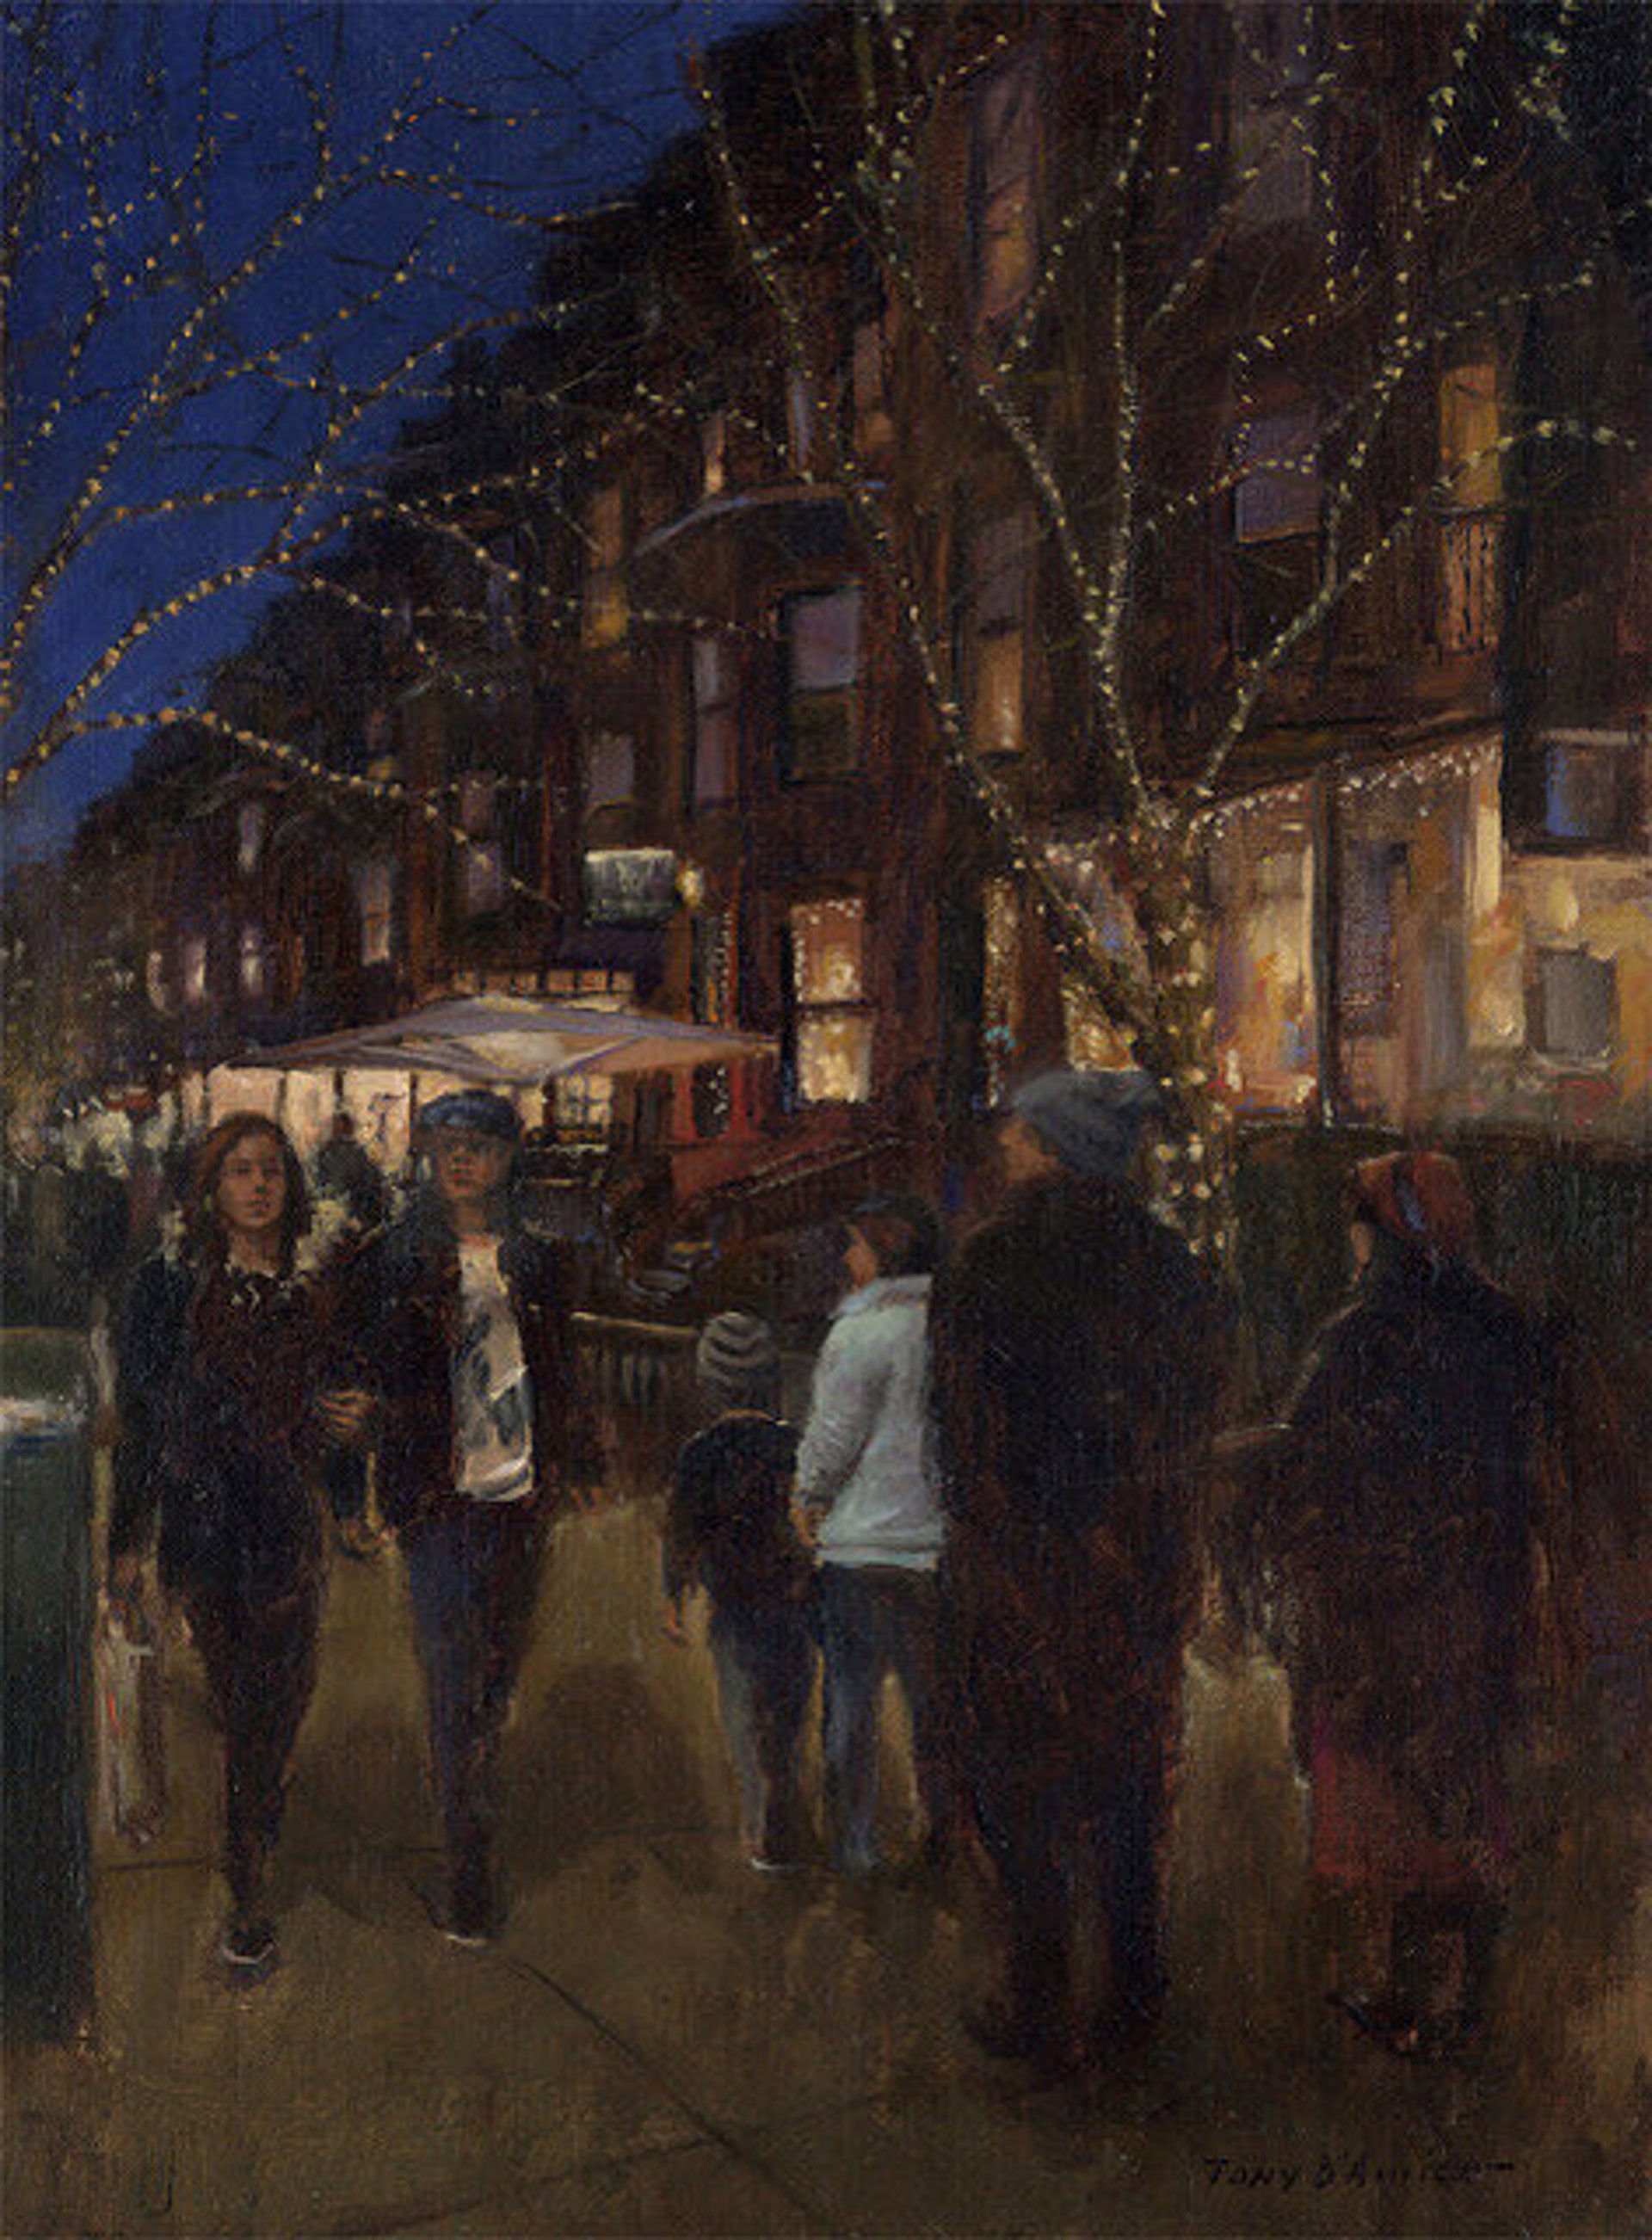 Evening Stroll on Newbury Street by Tony D'Amico